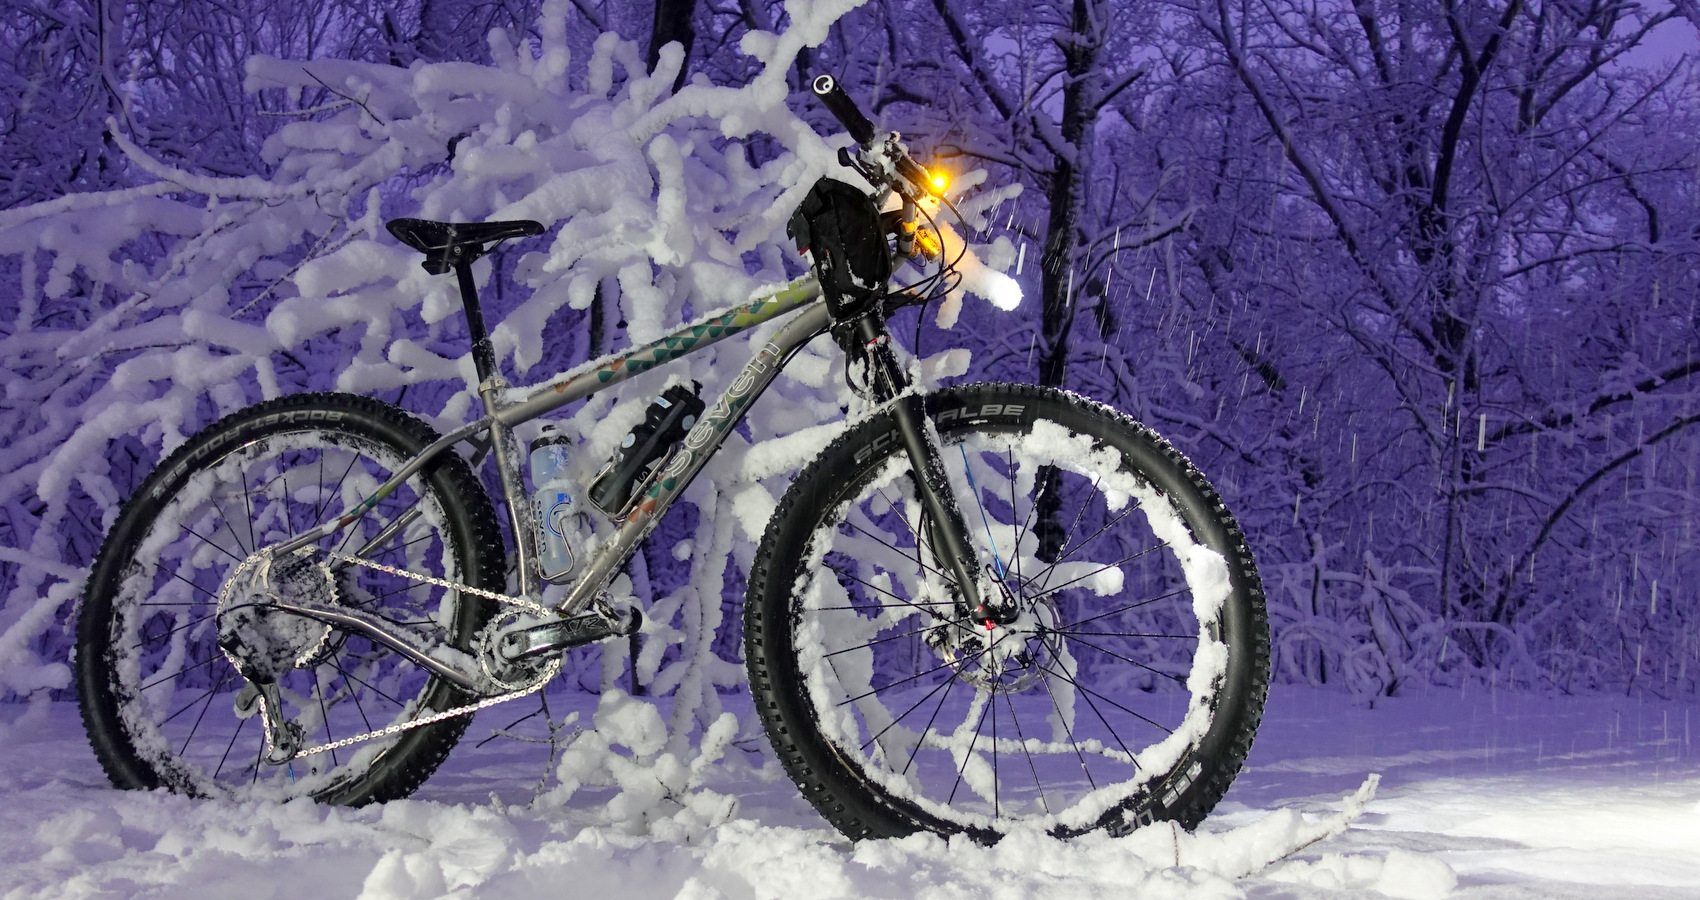 Plus bike in snow